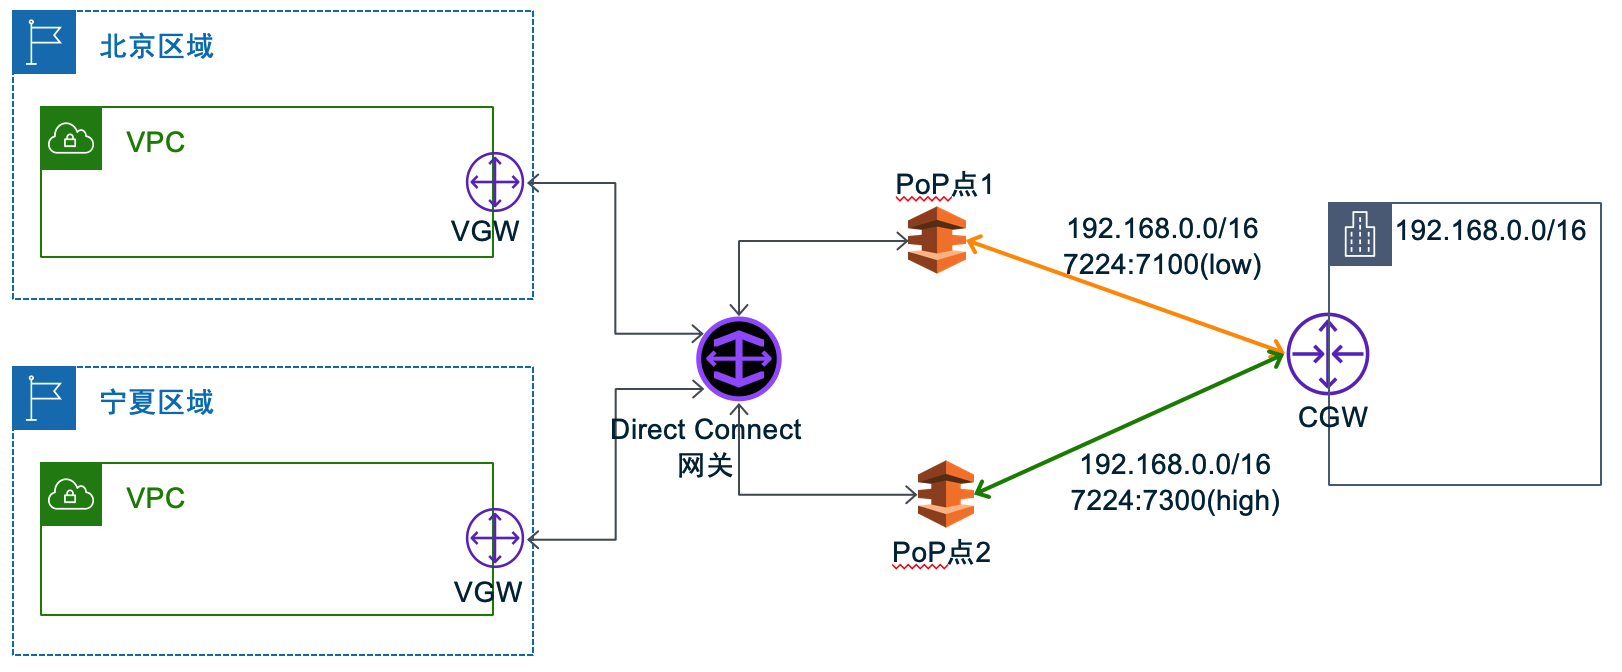 Connect gateway. Функционал Advanced direct connect 3gpp. AMD direct connect scheme. DIRECTCONNECT. AWS 中国.